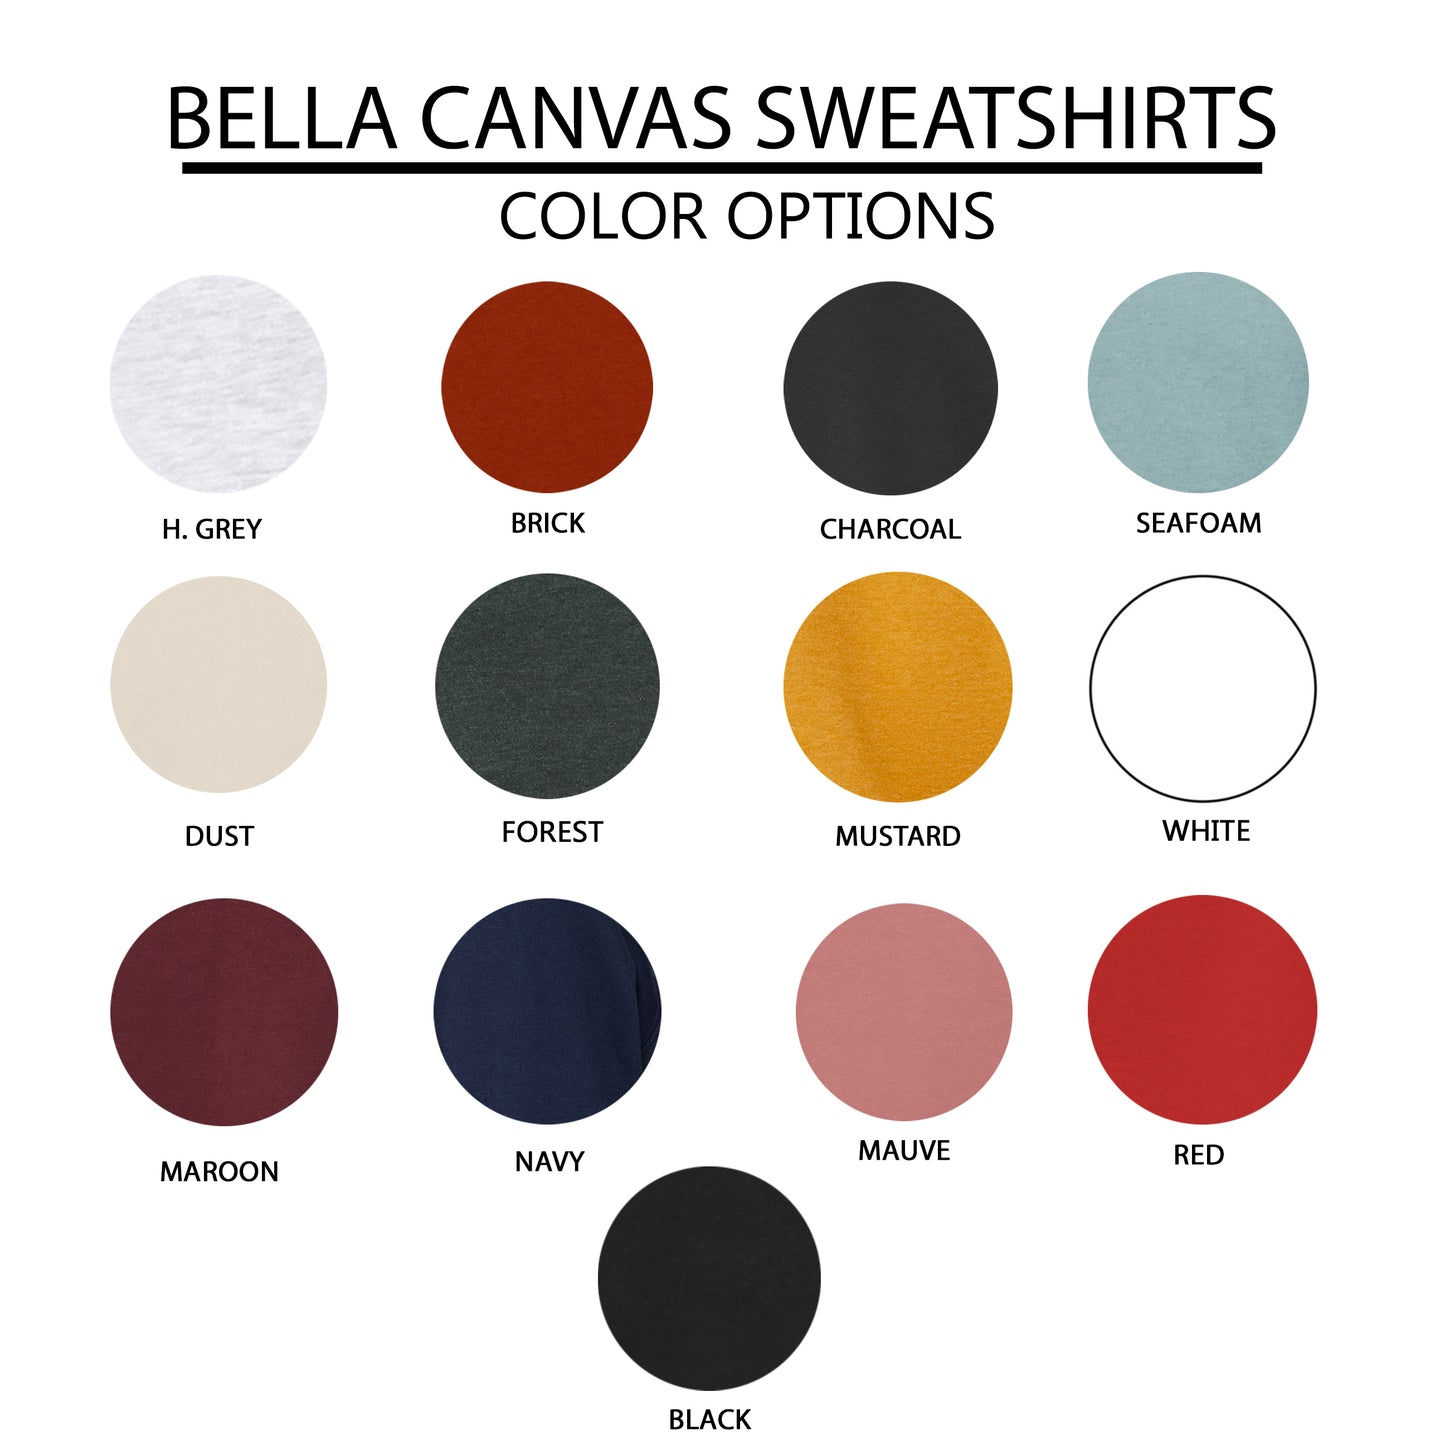 I Am His Masterpiece | Bella Canvas Premium Sweatshirt